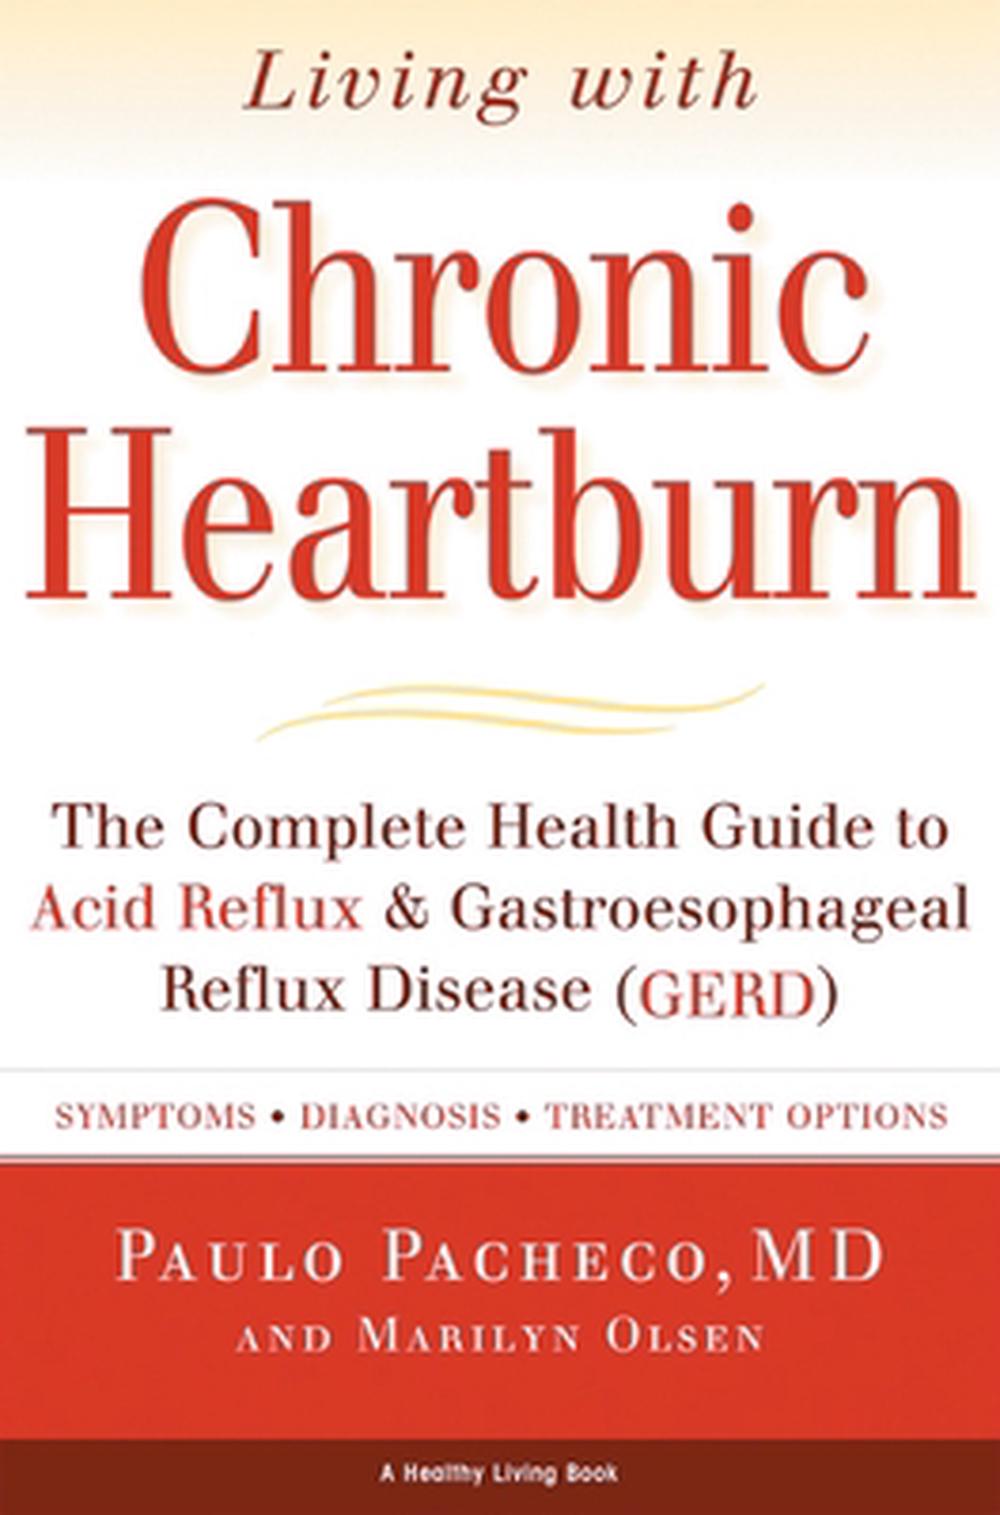 heartburn book